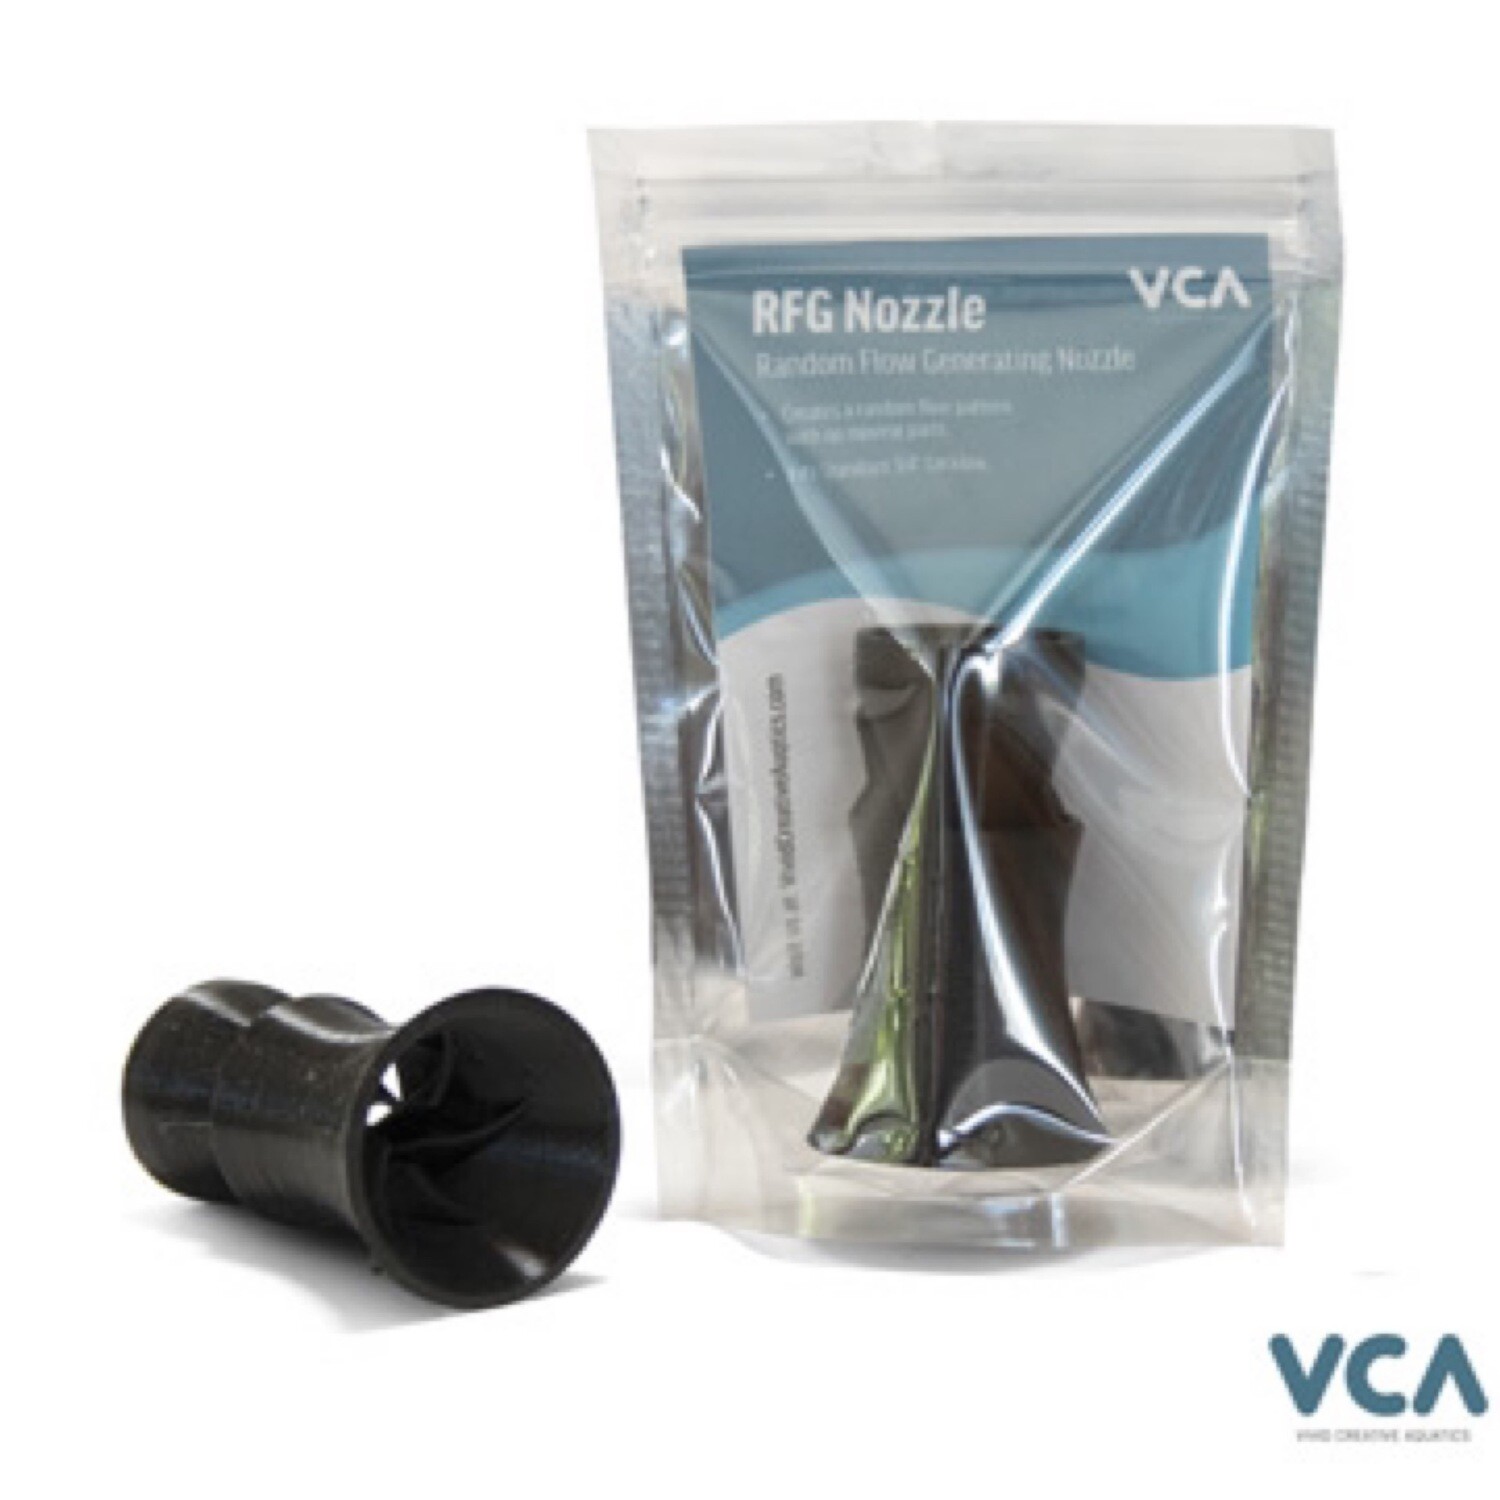 VCA 1/2” RFG Nozzle